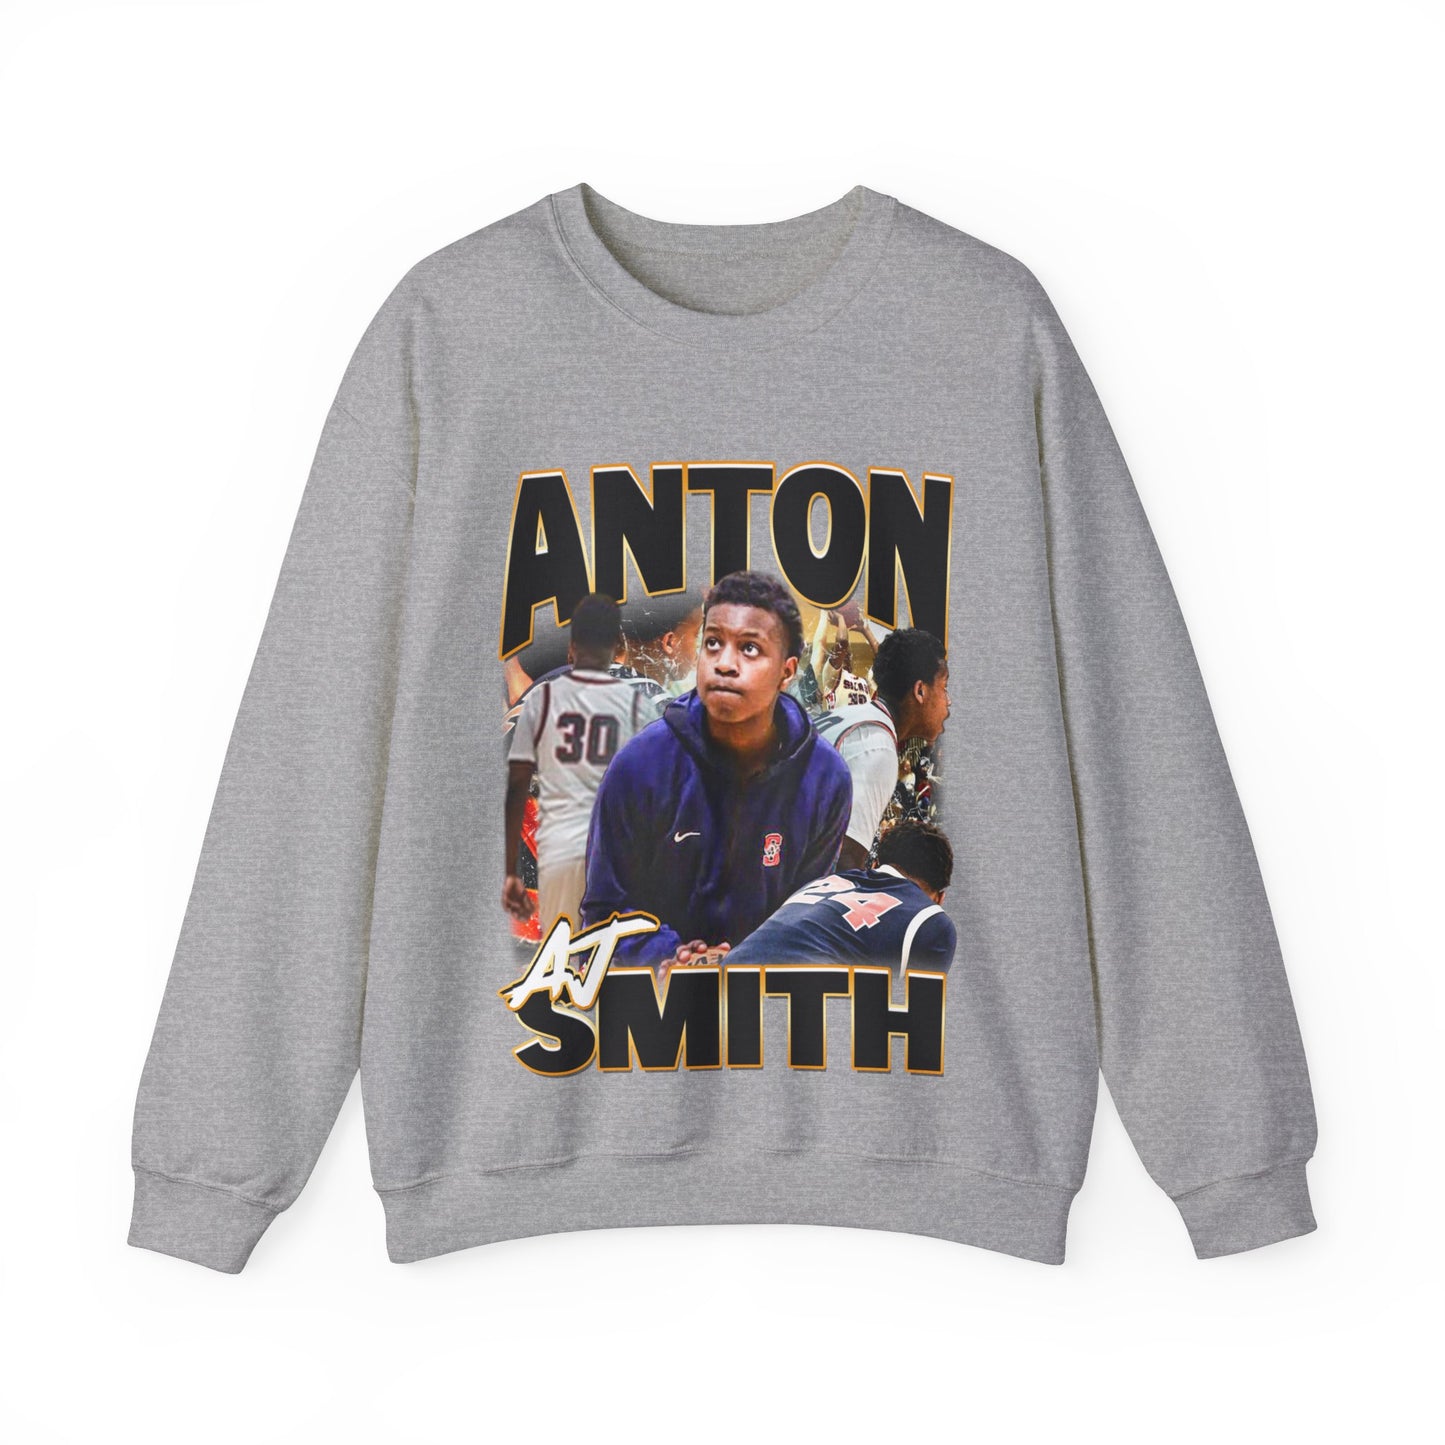 Anton Smith Crewneck Sweatshirt